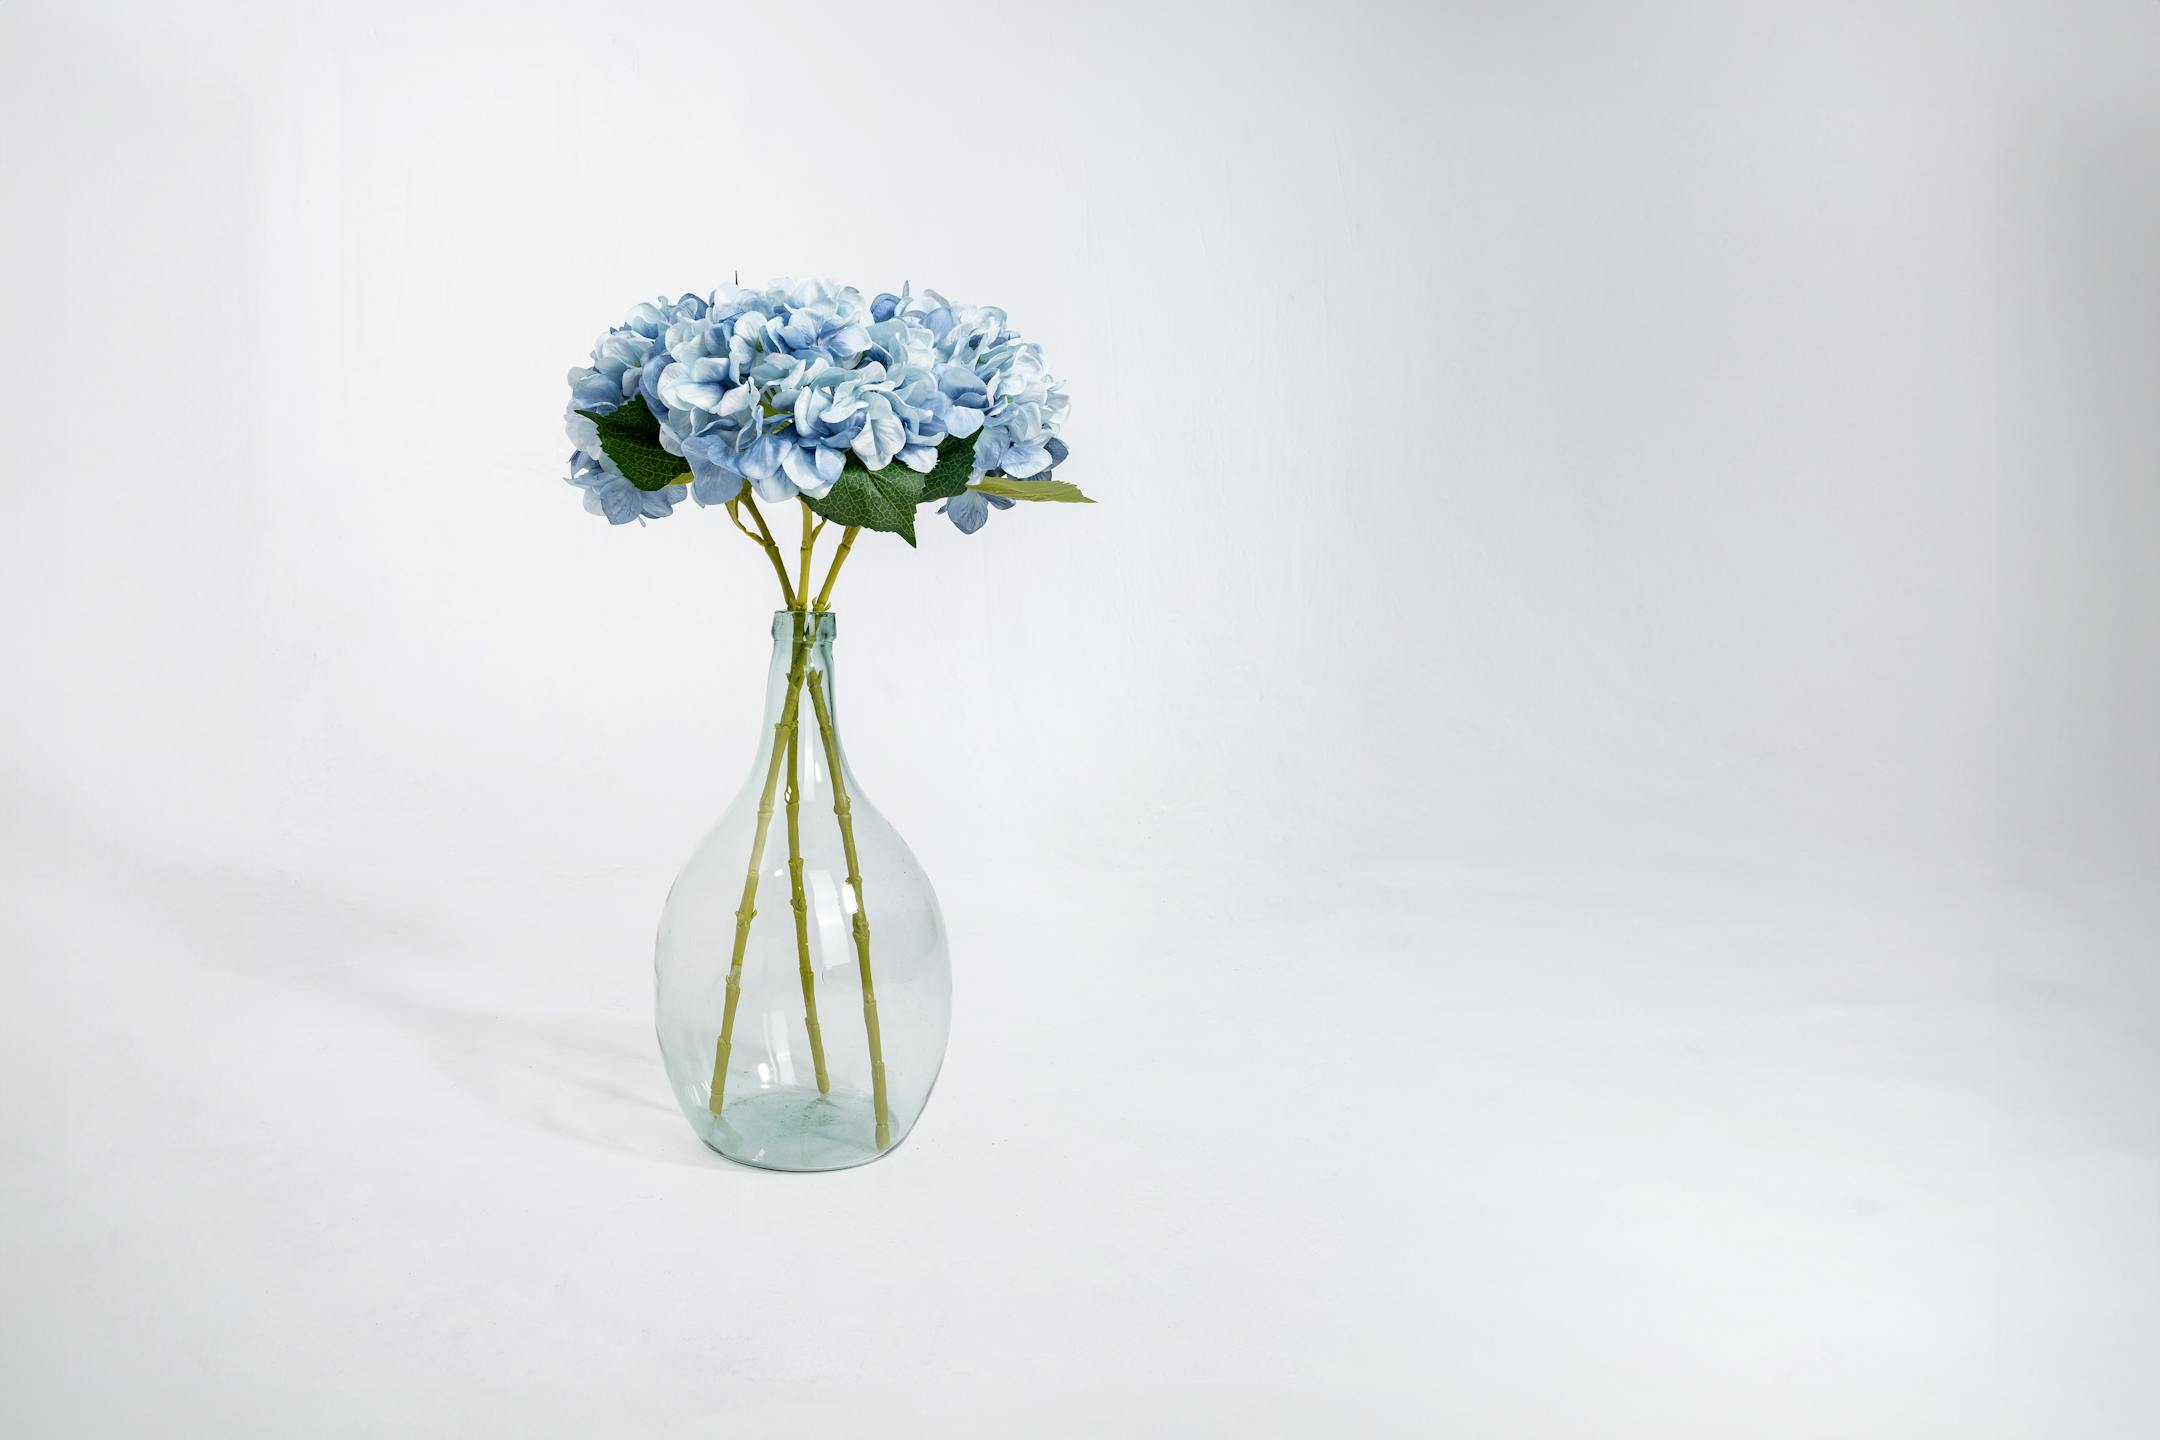 Blue artificial hydrangea stems in glass vase